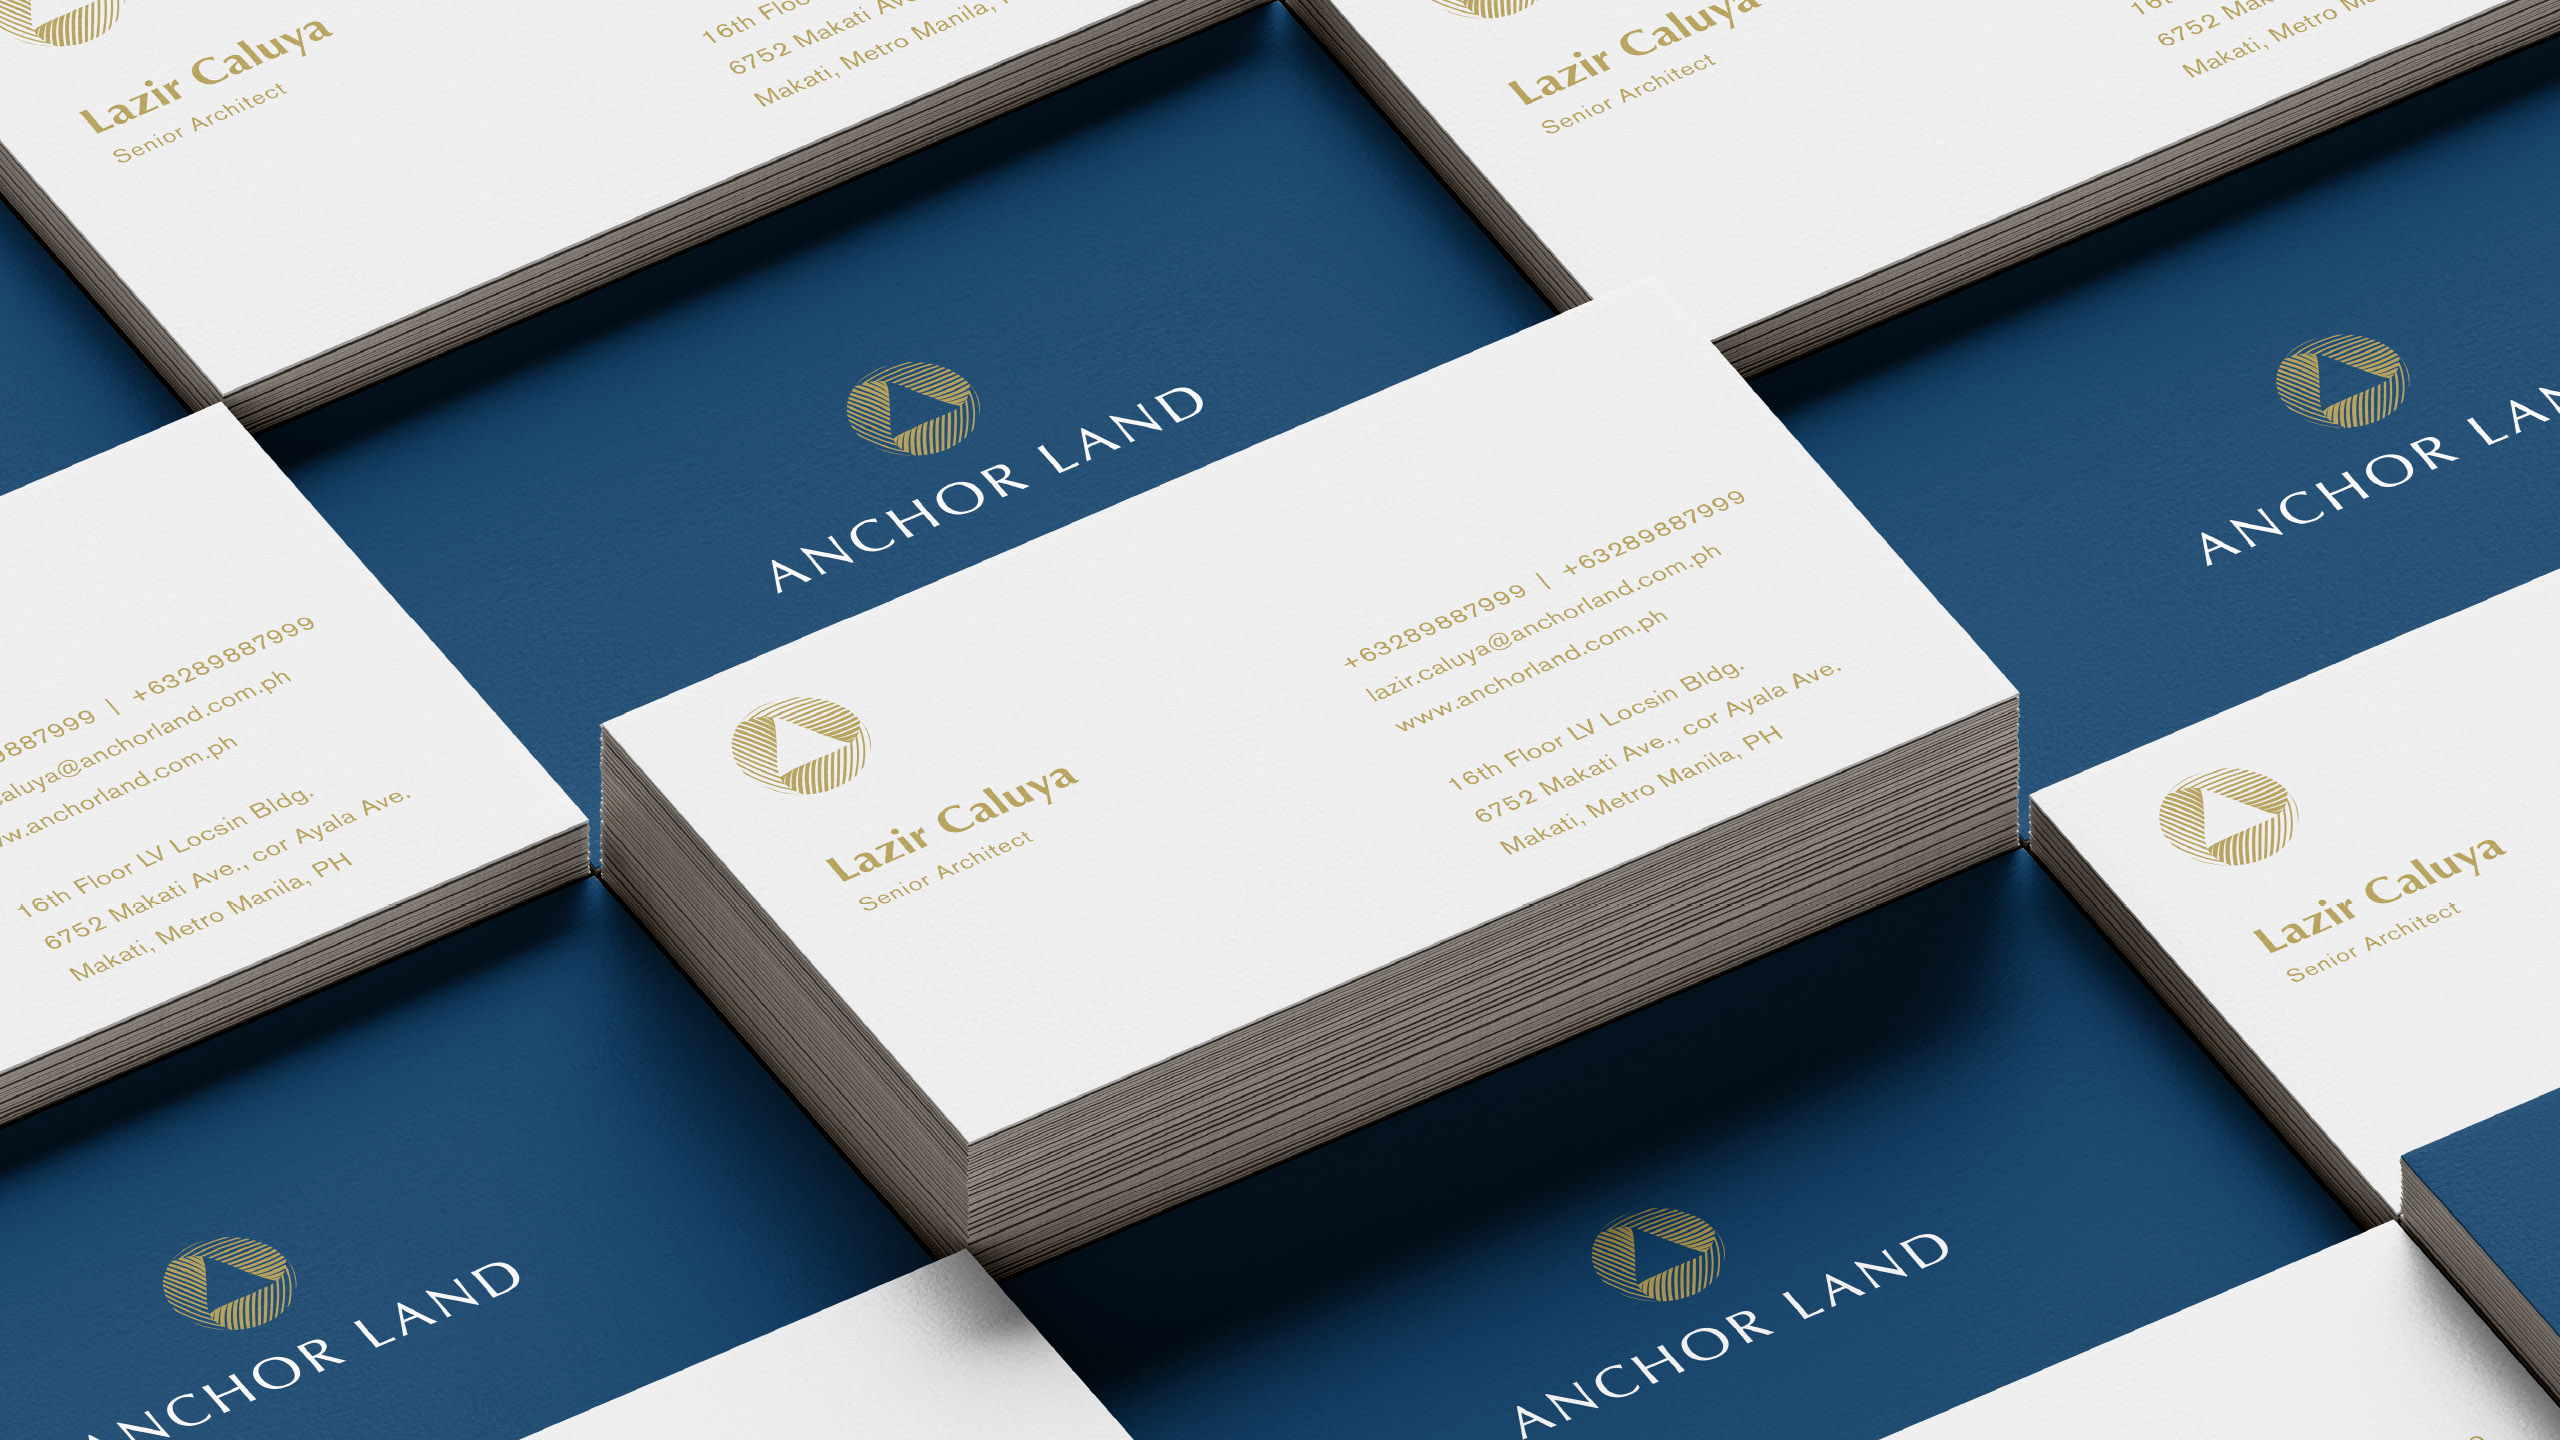 Minimal yet premium corporate business card design for property developer brand Anchor Land